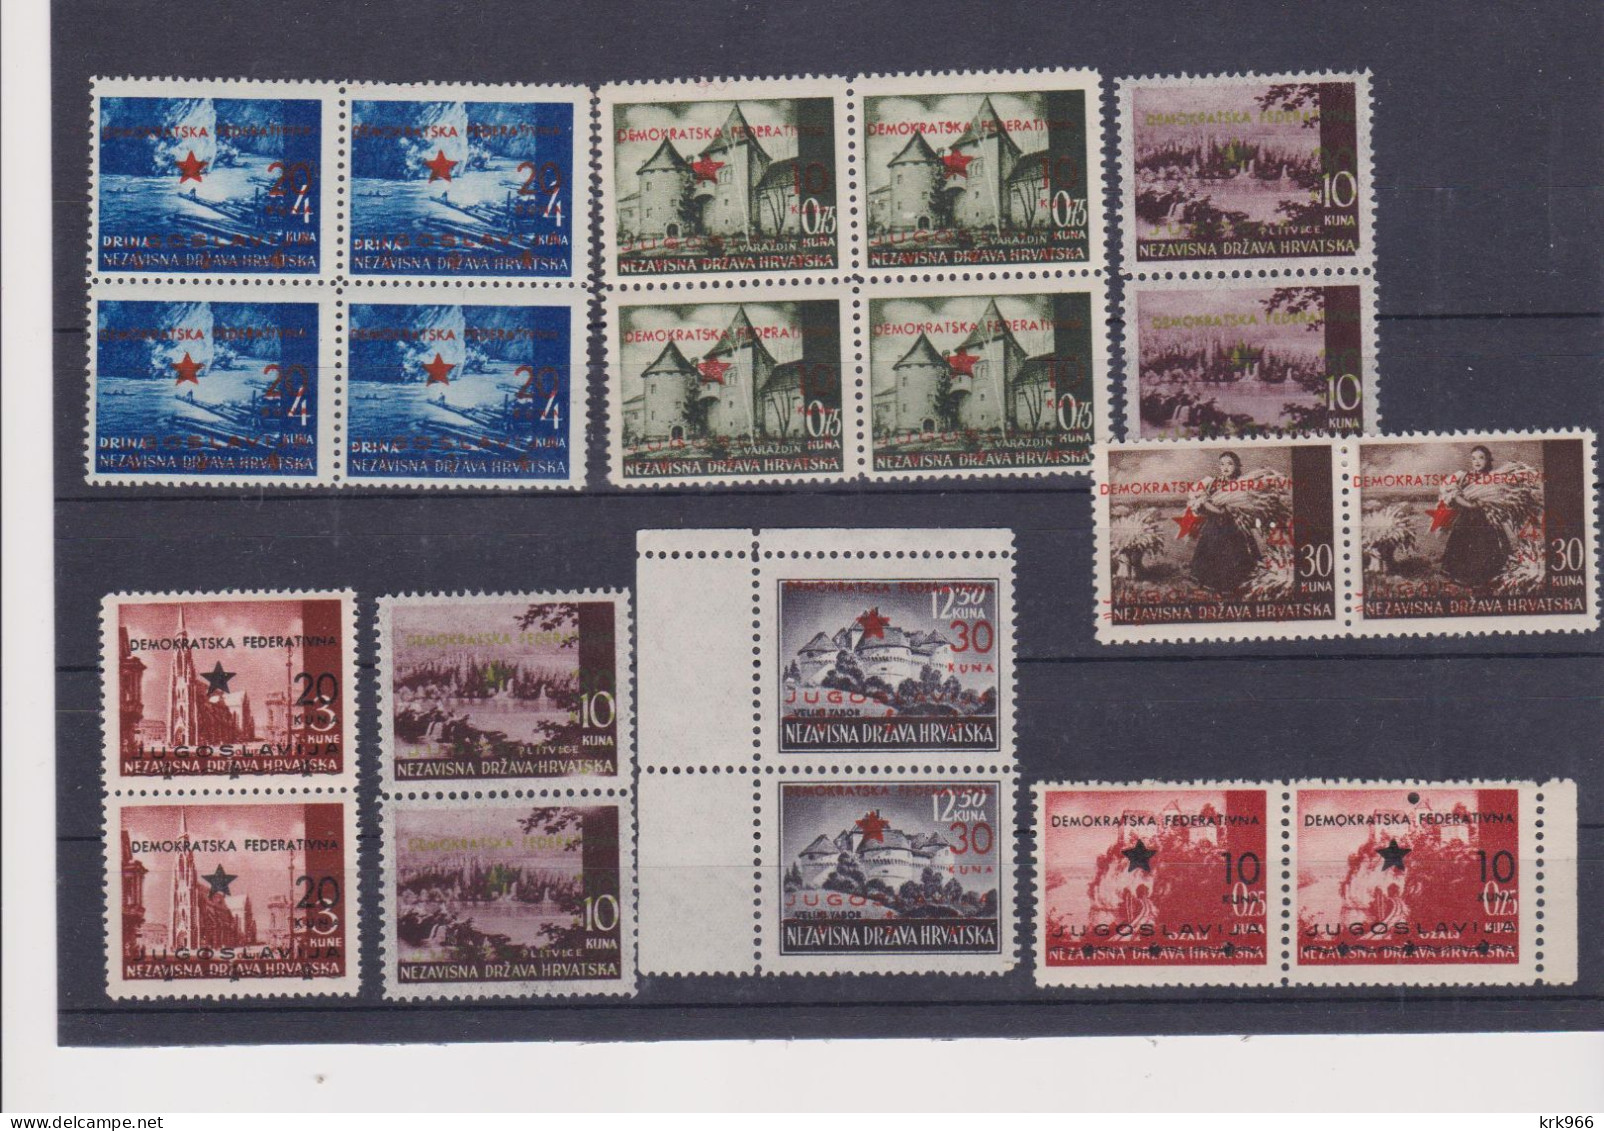 YUGOSLAVIA,1945 CROATIA SPLIT ISSUE Stamps Lot MNH - Nuevos